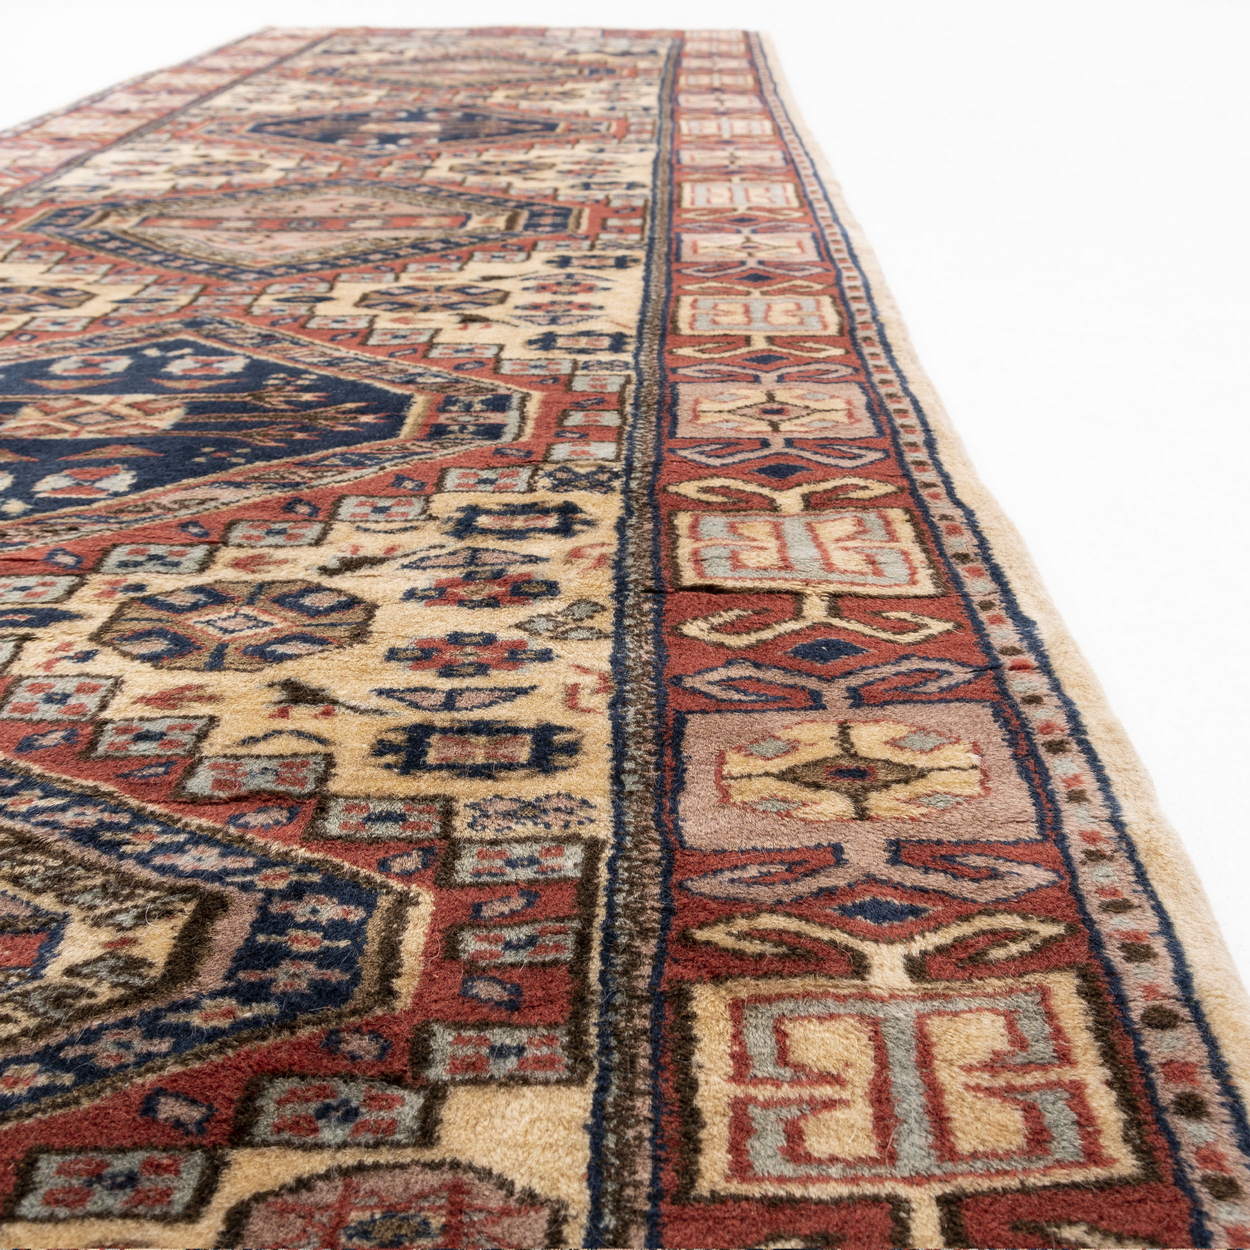 Oriental Turkish Runner Rug Handmade Wool On Wool Anatolian 98 X 293 Cm - 3' 3'' X 9' 8'' Multicolor C016